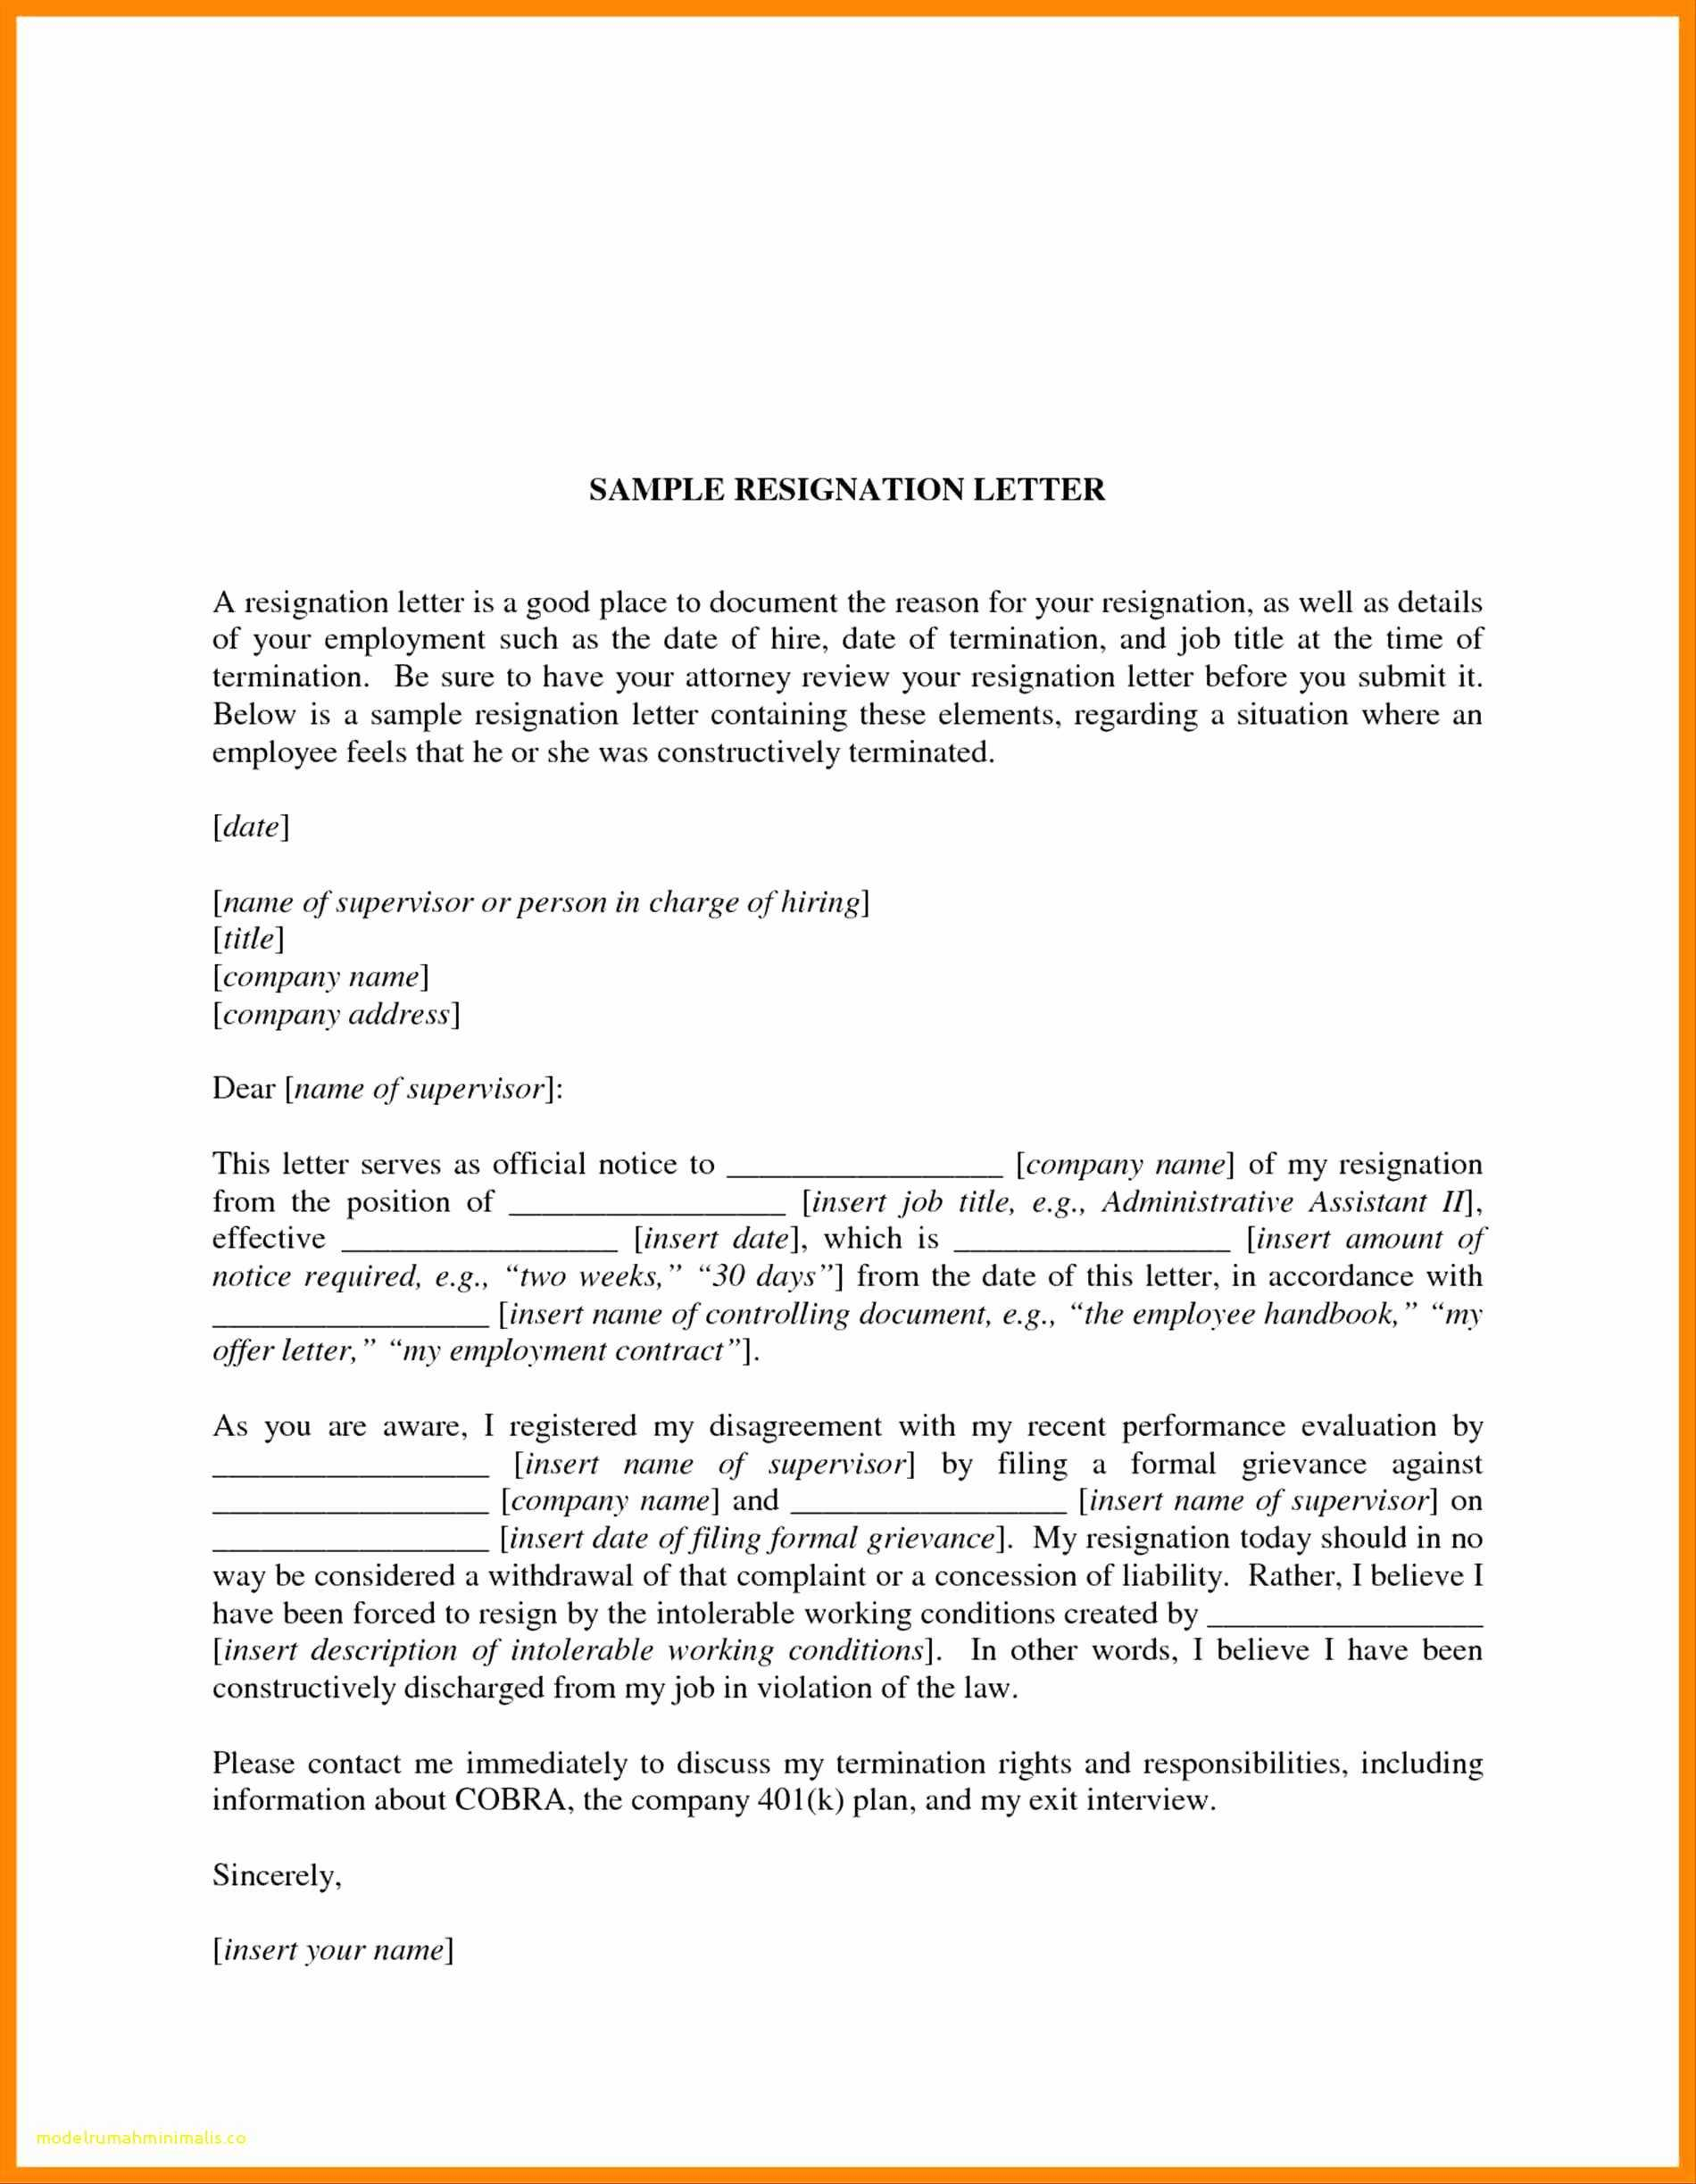 Cobra Letter Template - 401k Statement Sample Along with Employee Handbook Cover Design